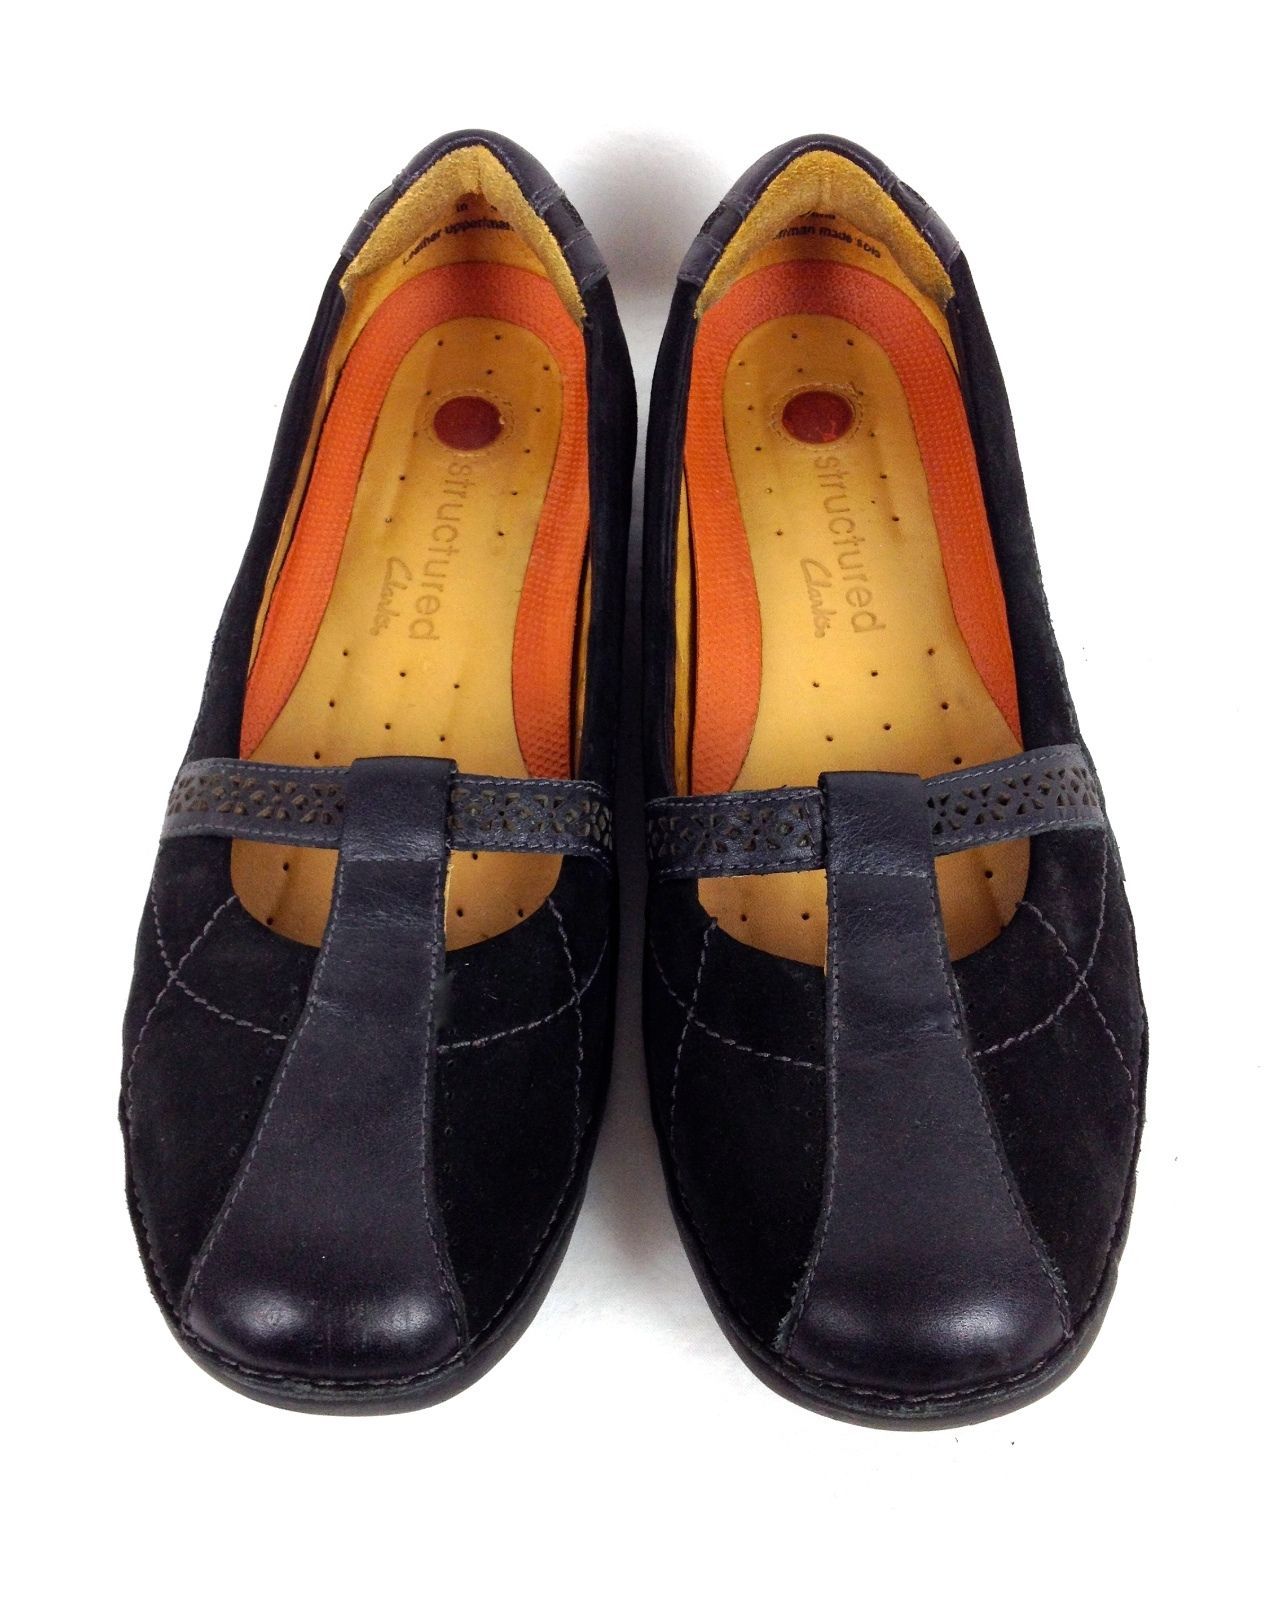 Clarks Shoes 9 Womens Black Leather Ballet Flats For Sale - Item #1474092